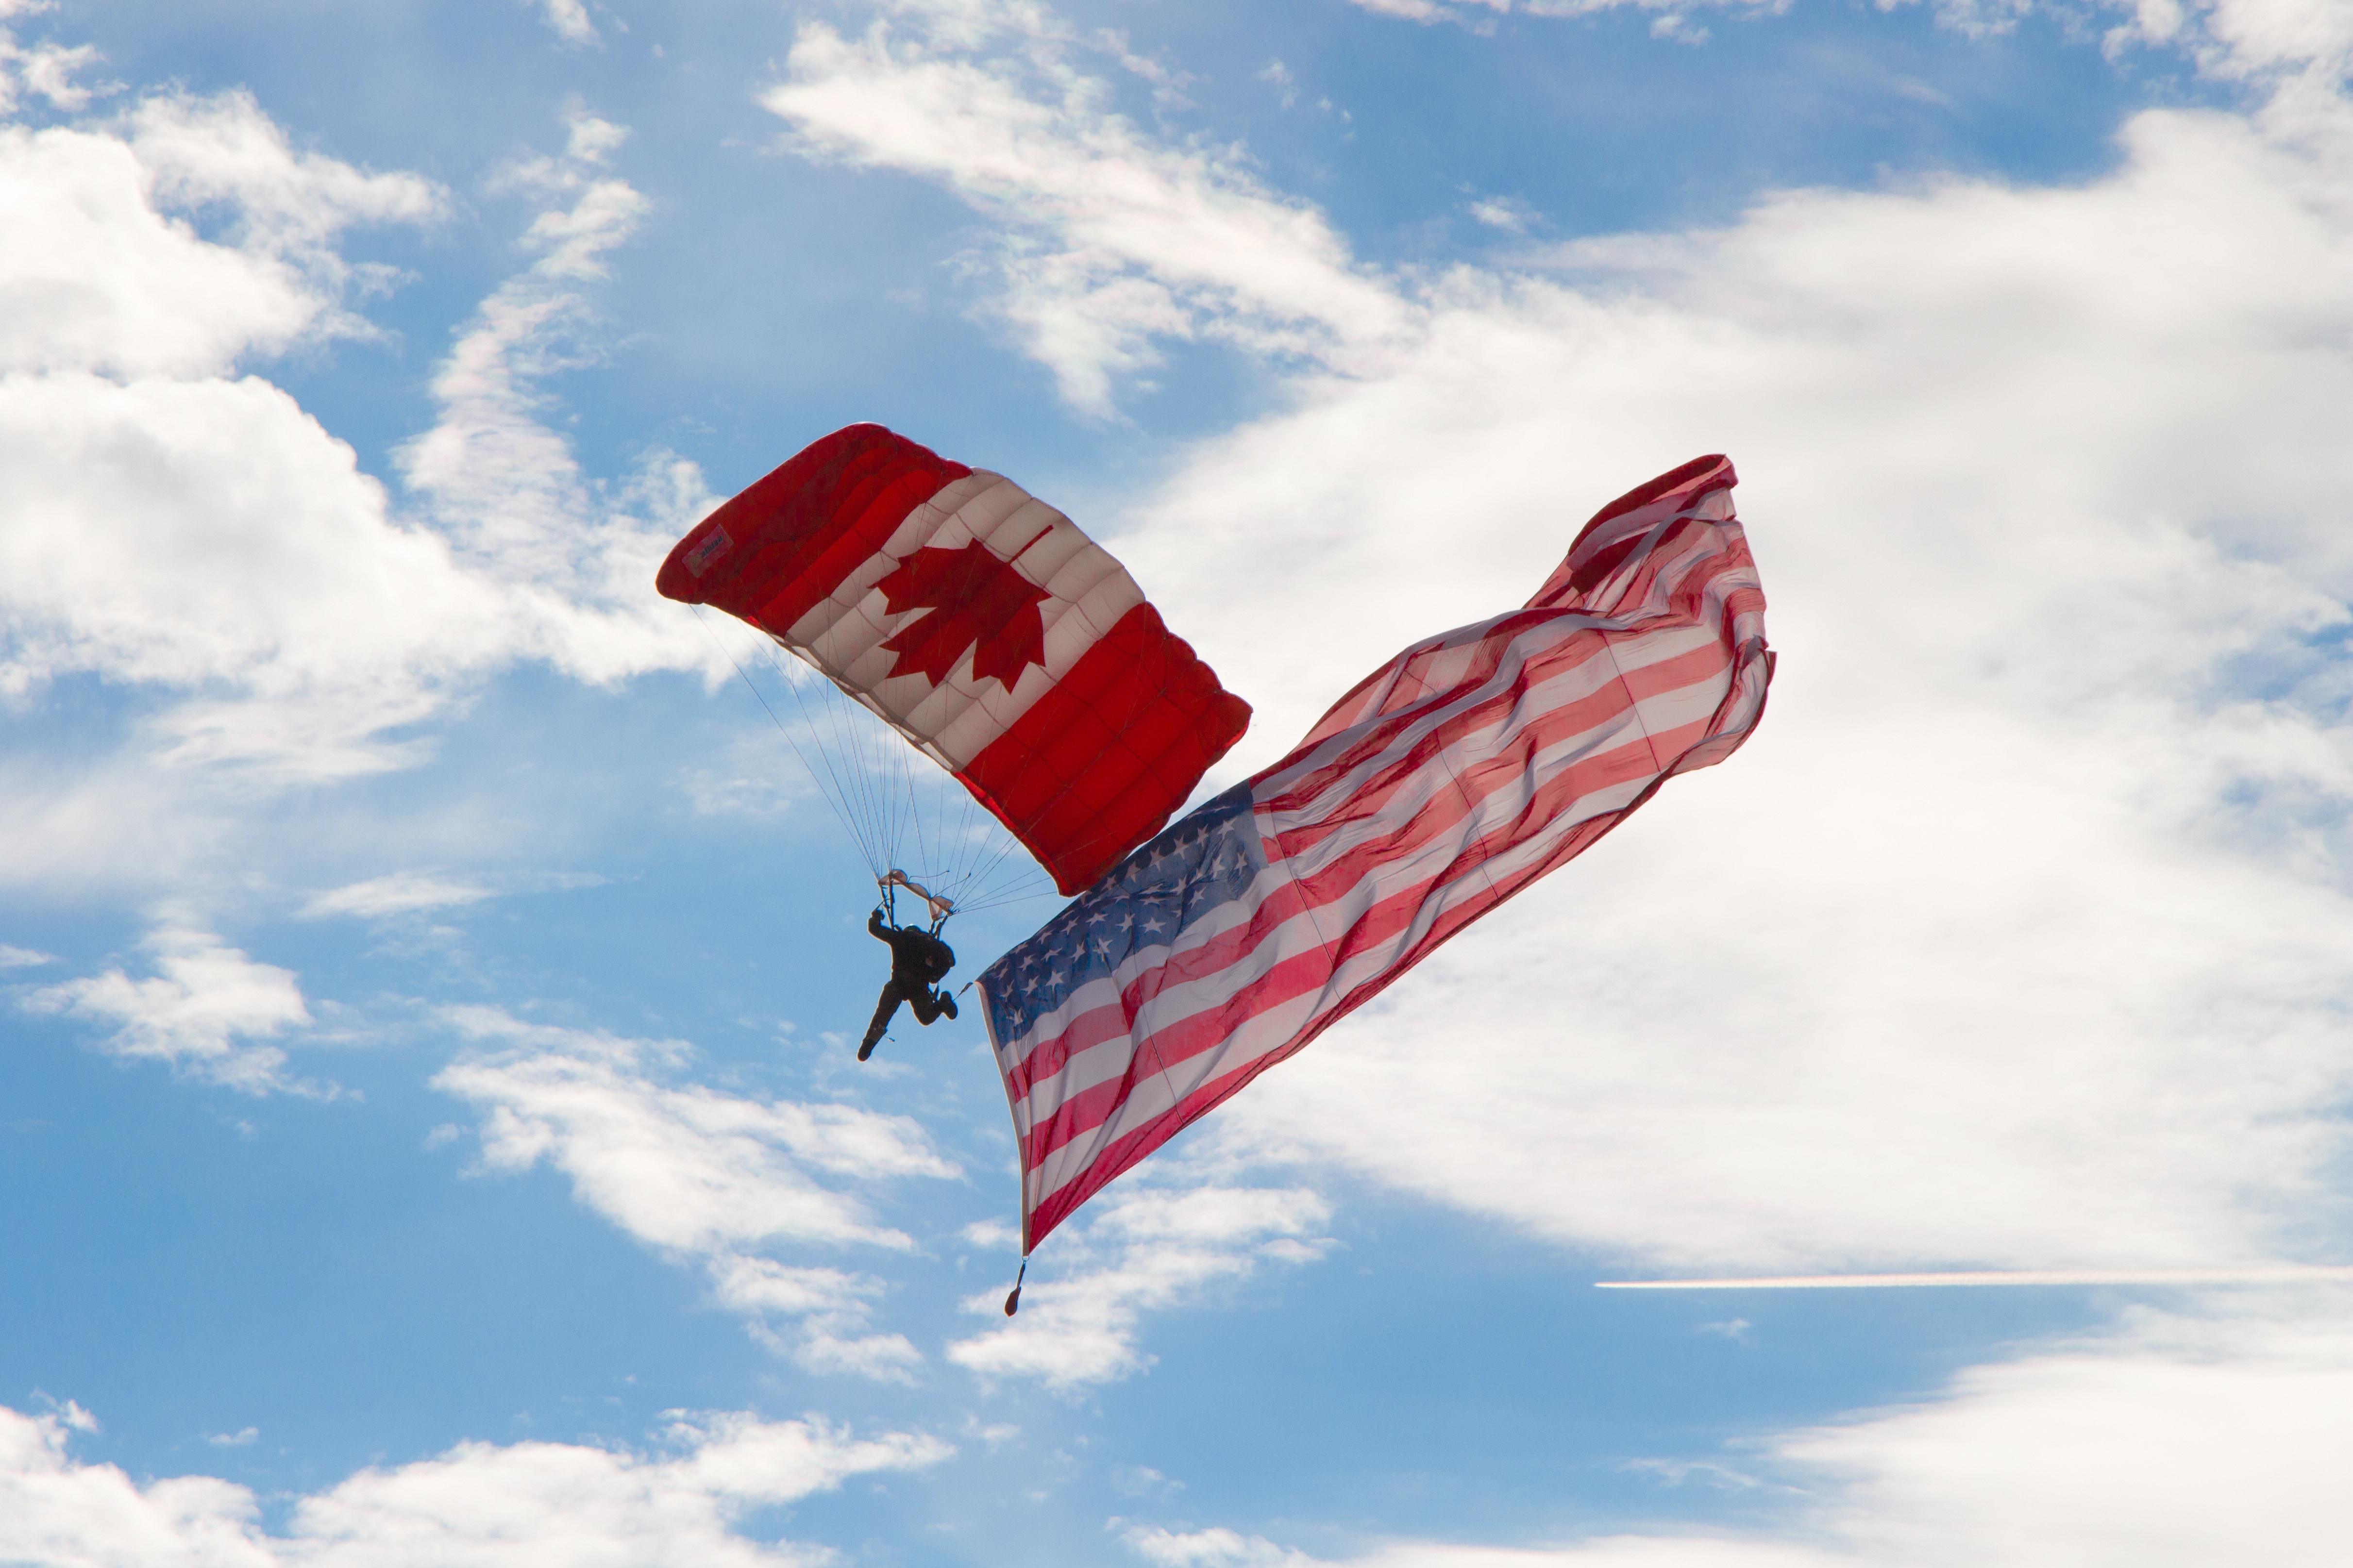 American, Airshow, Canadian, Skydiver, sky, cloud - sky